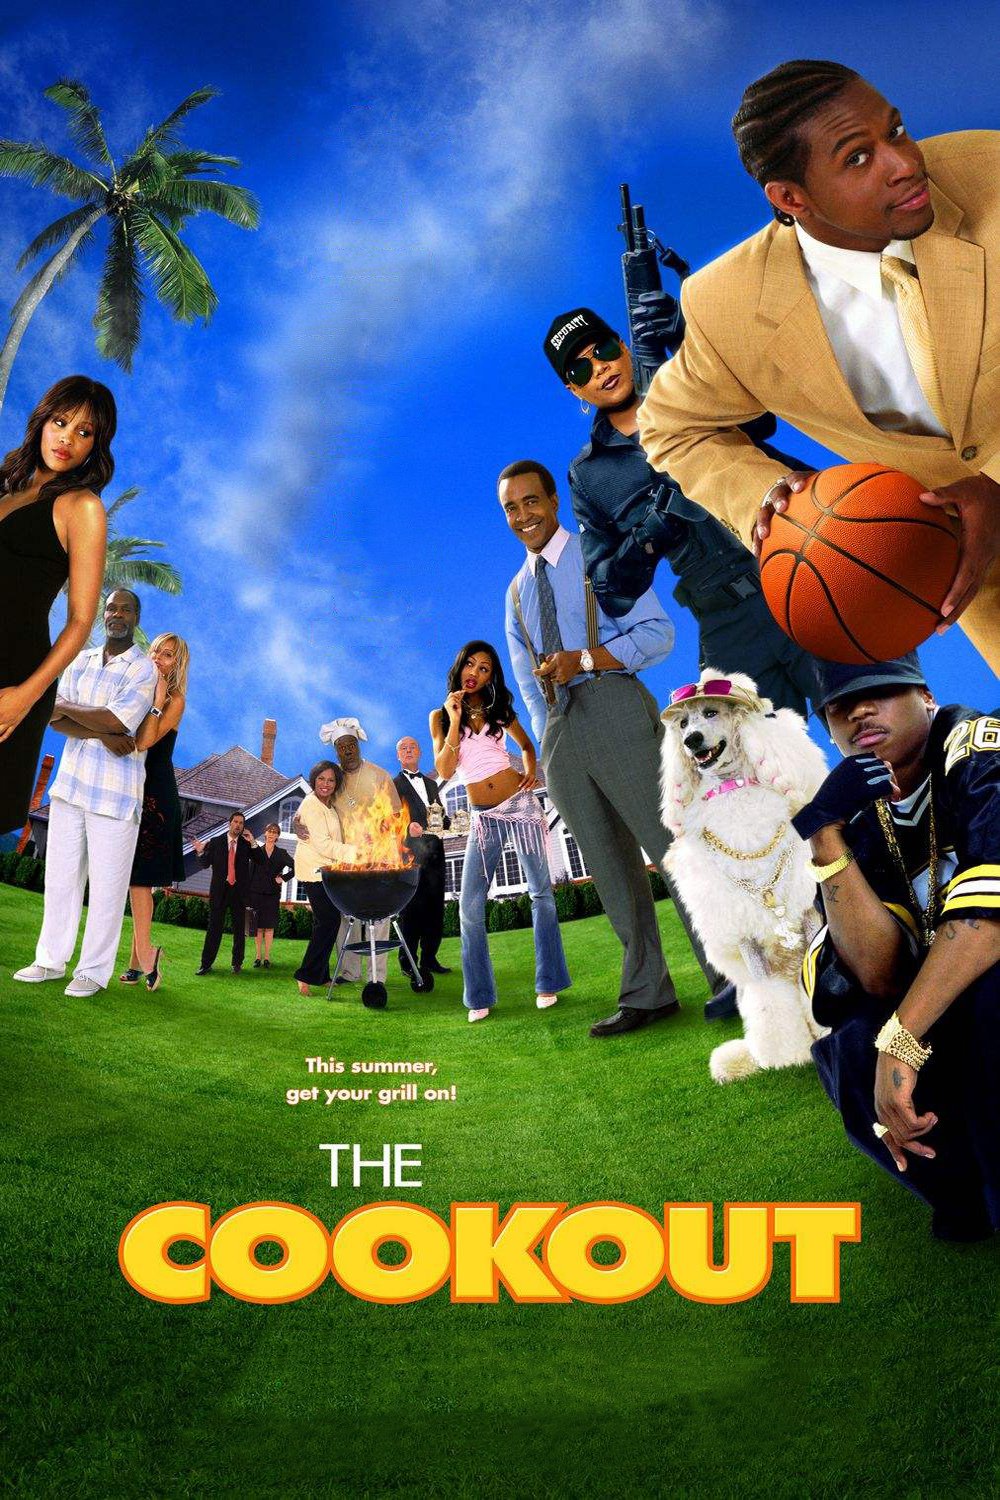 Plakat von "The Cookout"